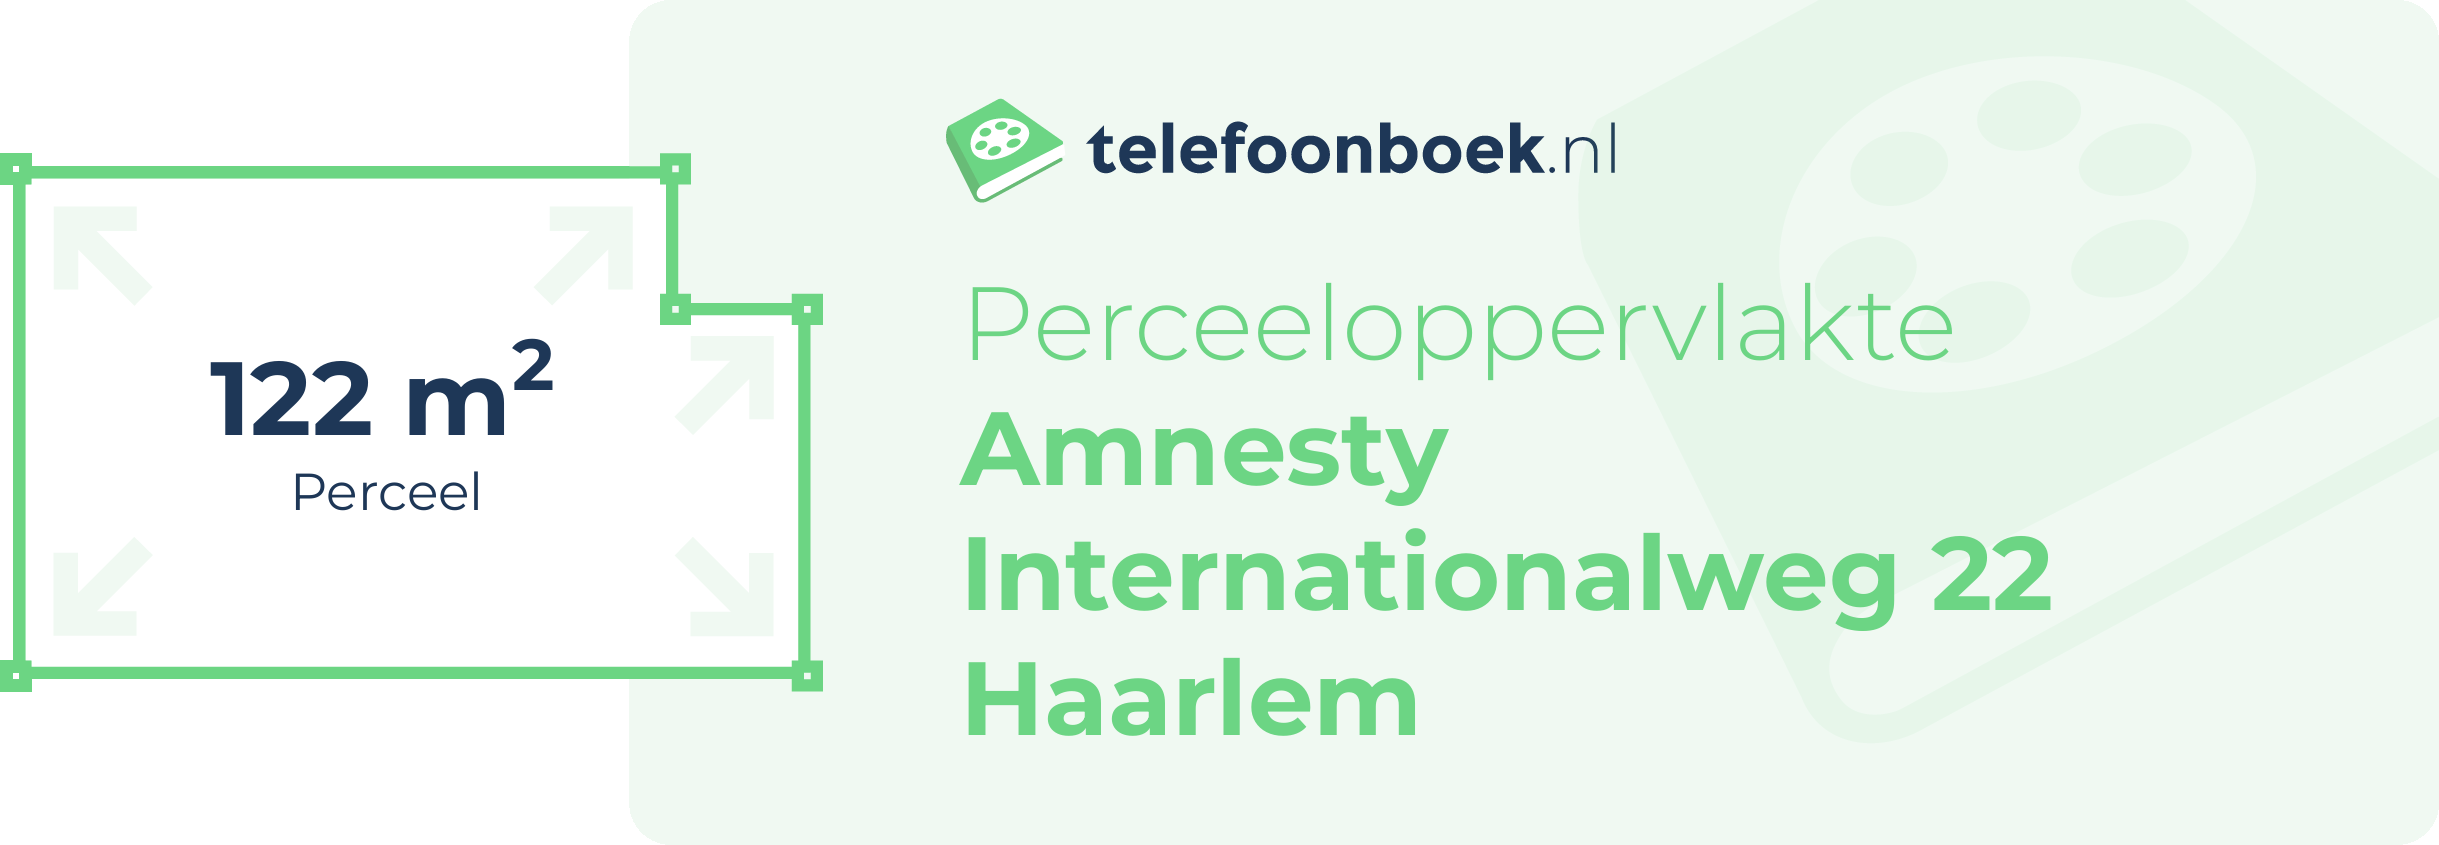 Perceeloppervlakte Amnesty Internationalweg 22 Haarlem